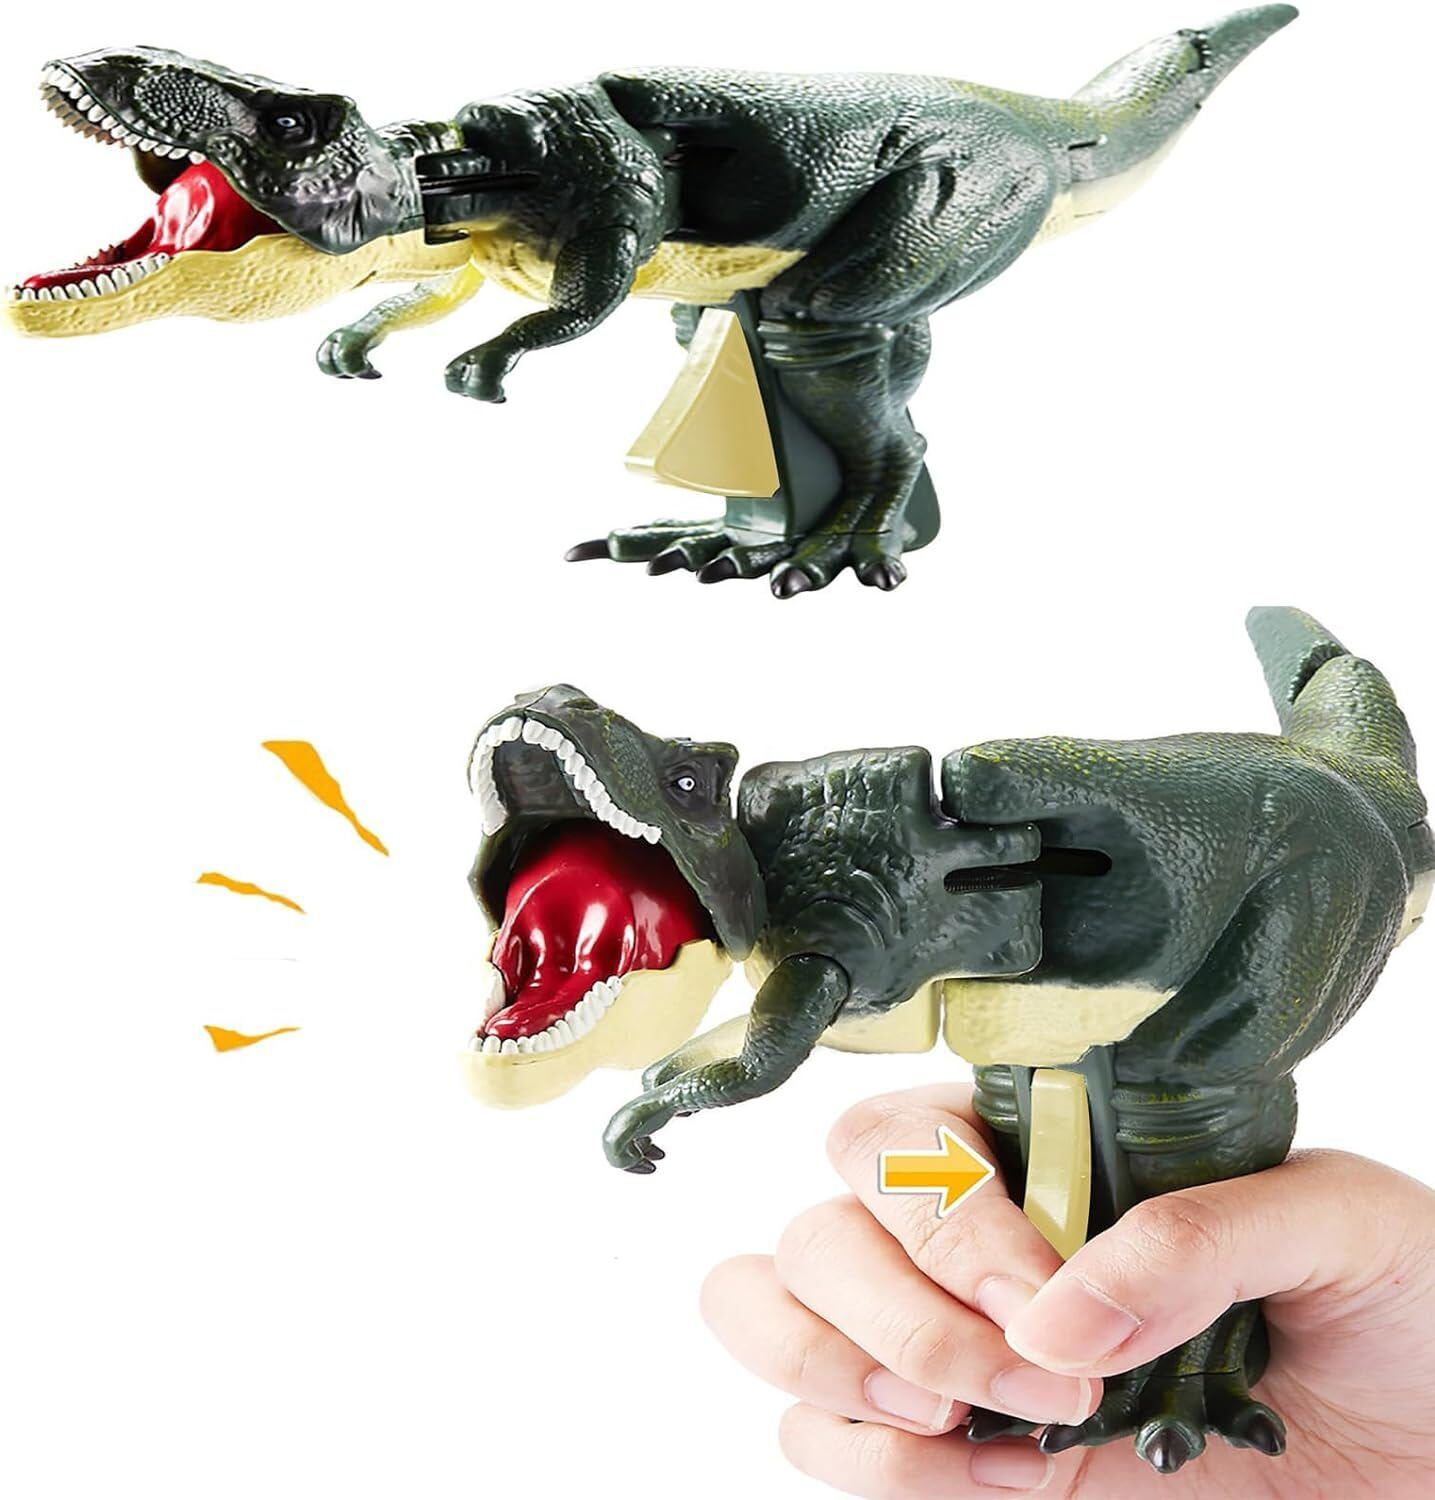 Kitcheniva T Rex Dinosaur Toy Trigger The Roaring Sounds